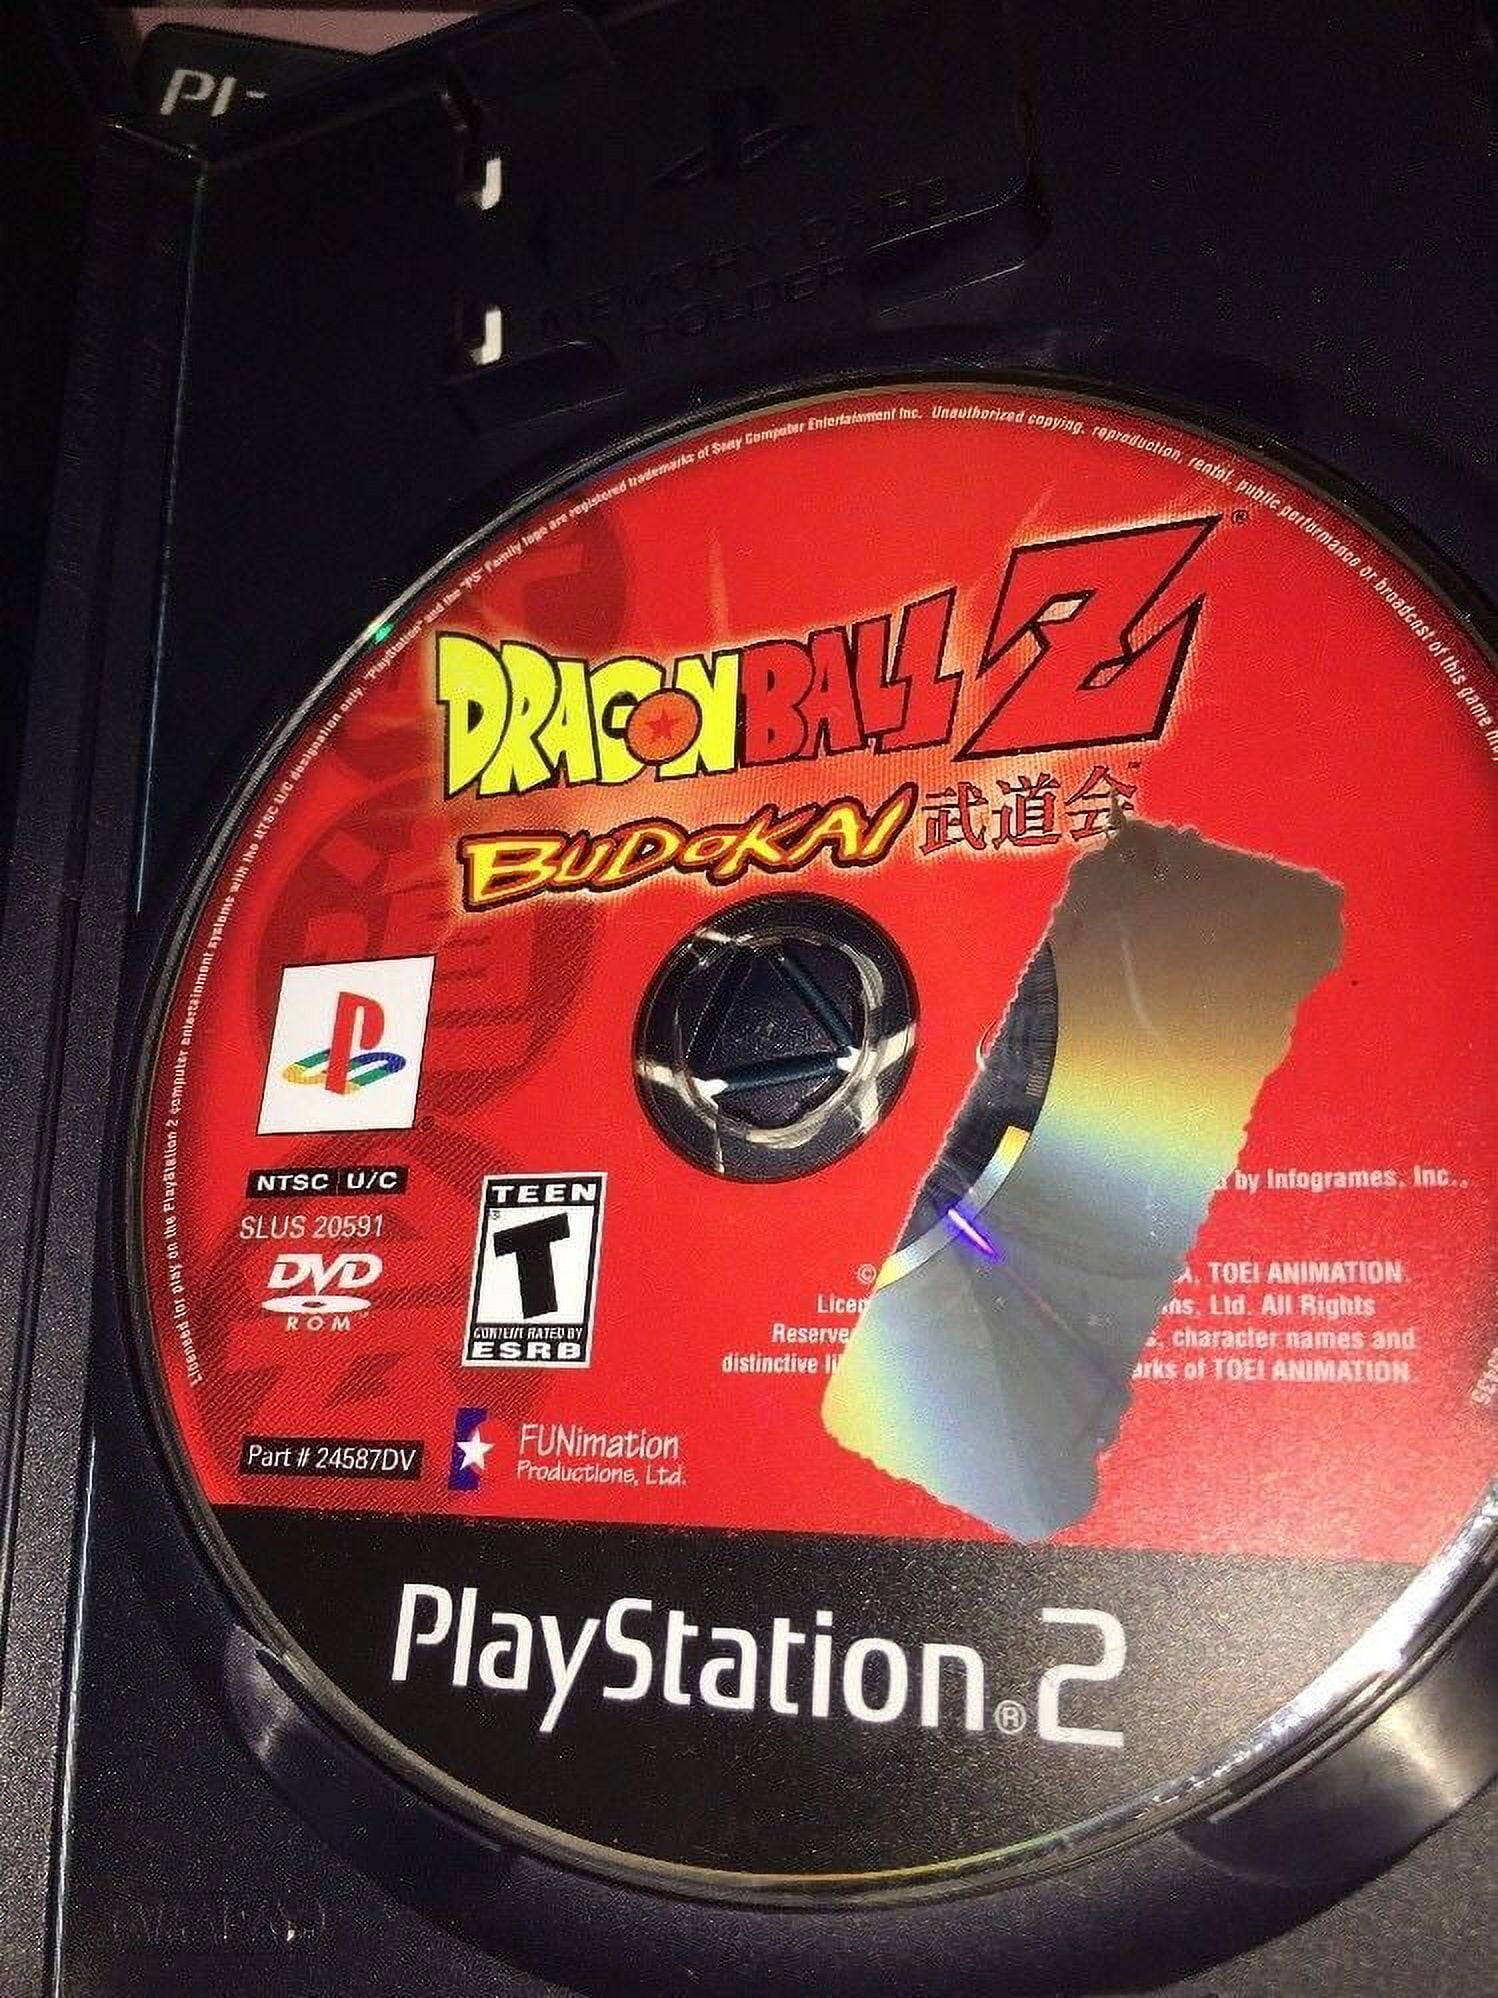 Dragon Ball Z Budokai Tenkaichi 3 with Bonus Disk - (PS2) PlayStation 2  [Pre-Owned]